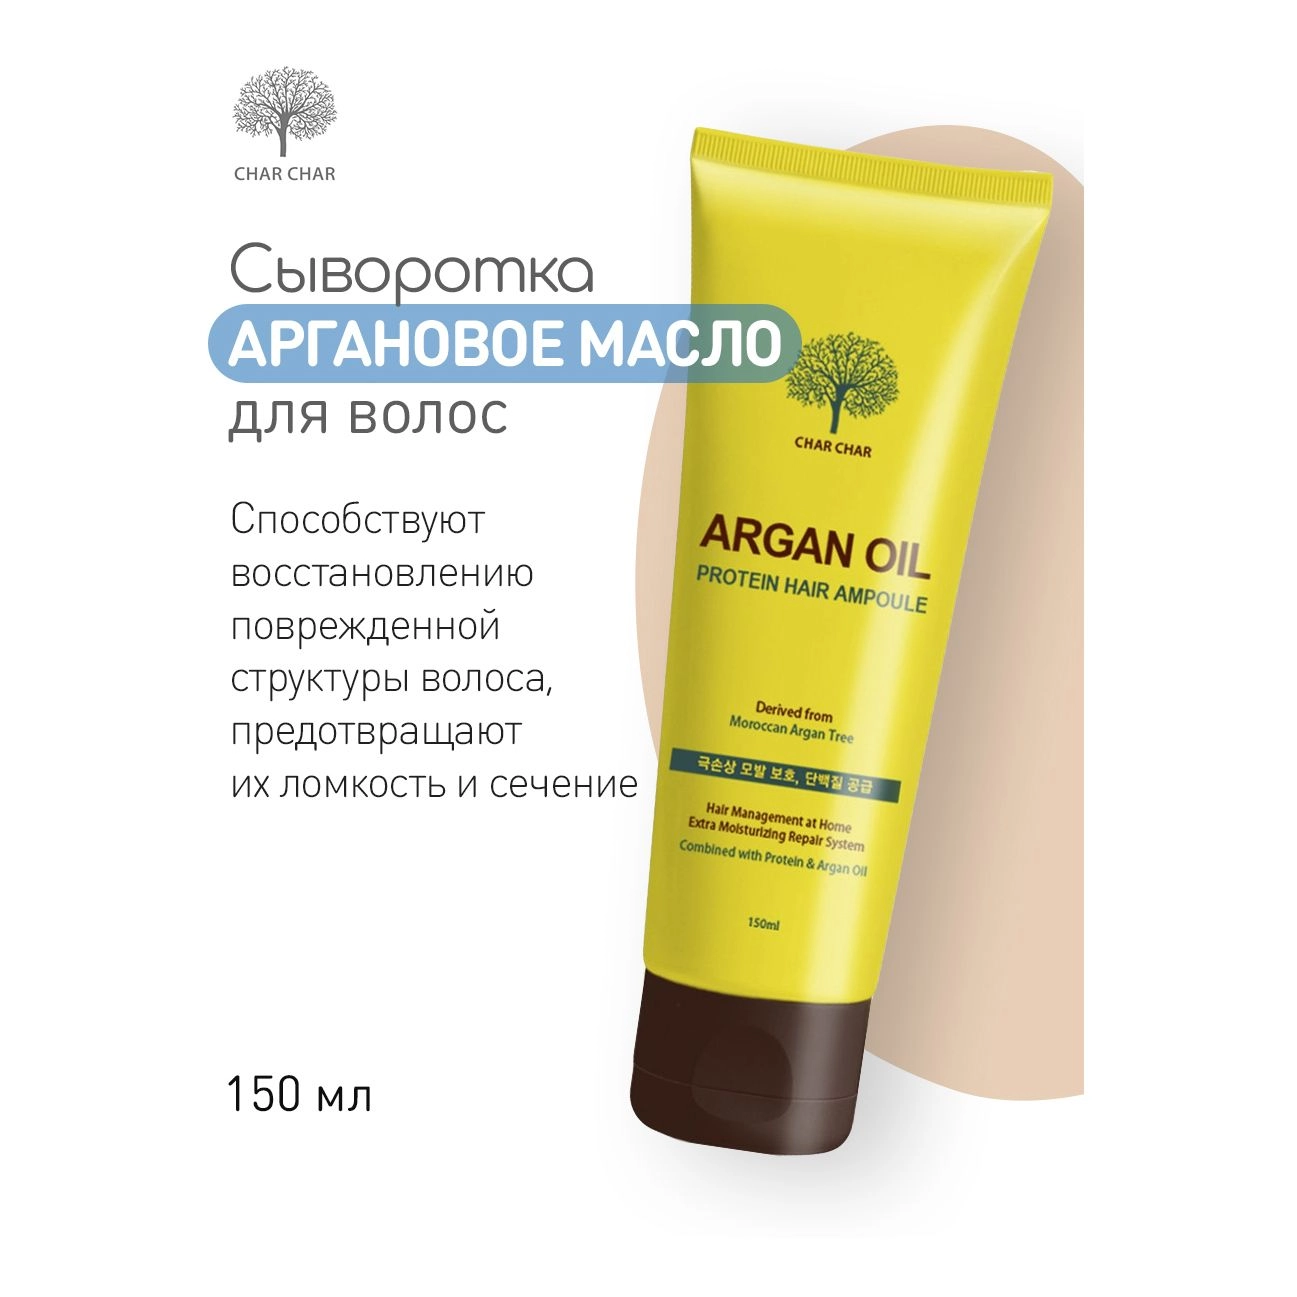 Сыворотка для волос с аргановым маслом - Char Char Argan Oil Protein Hair Ampoule, 150 мл - фото N5